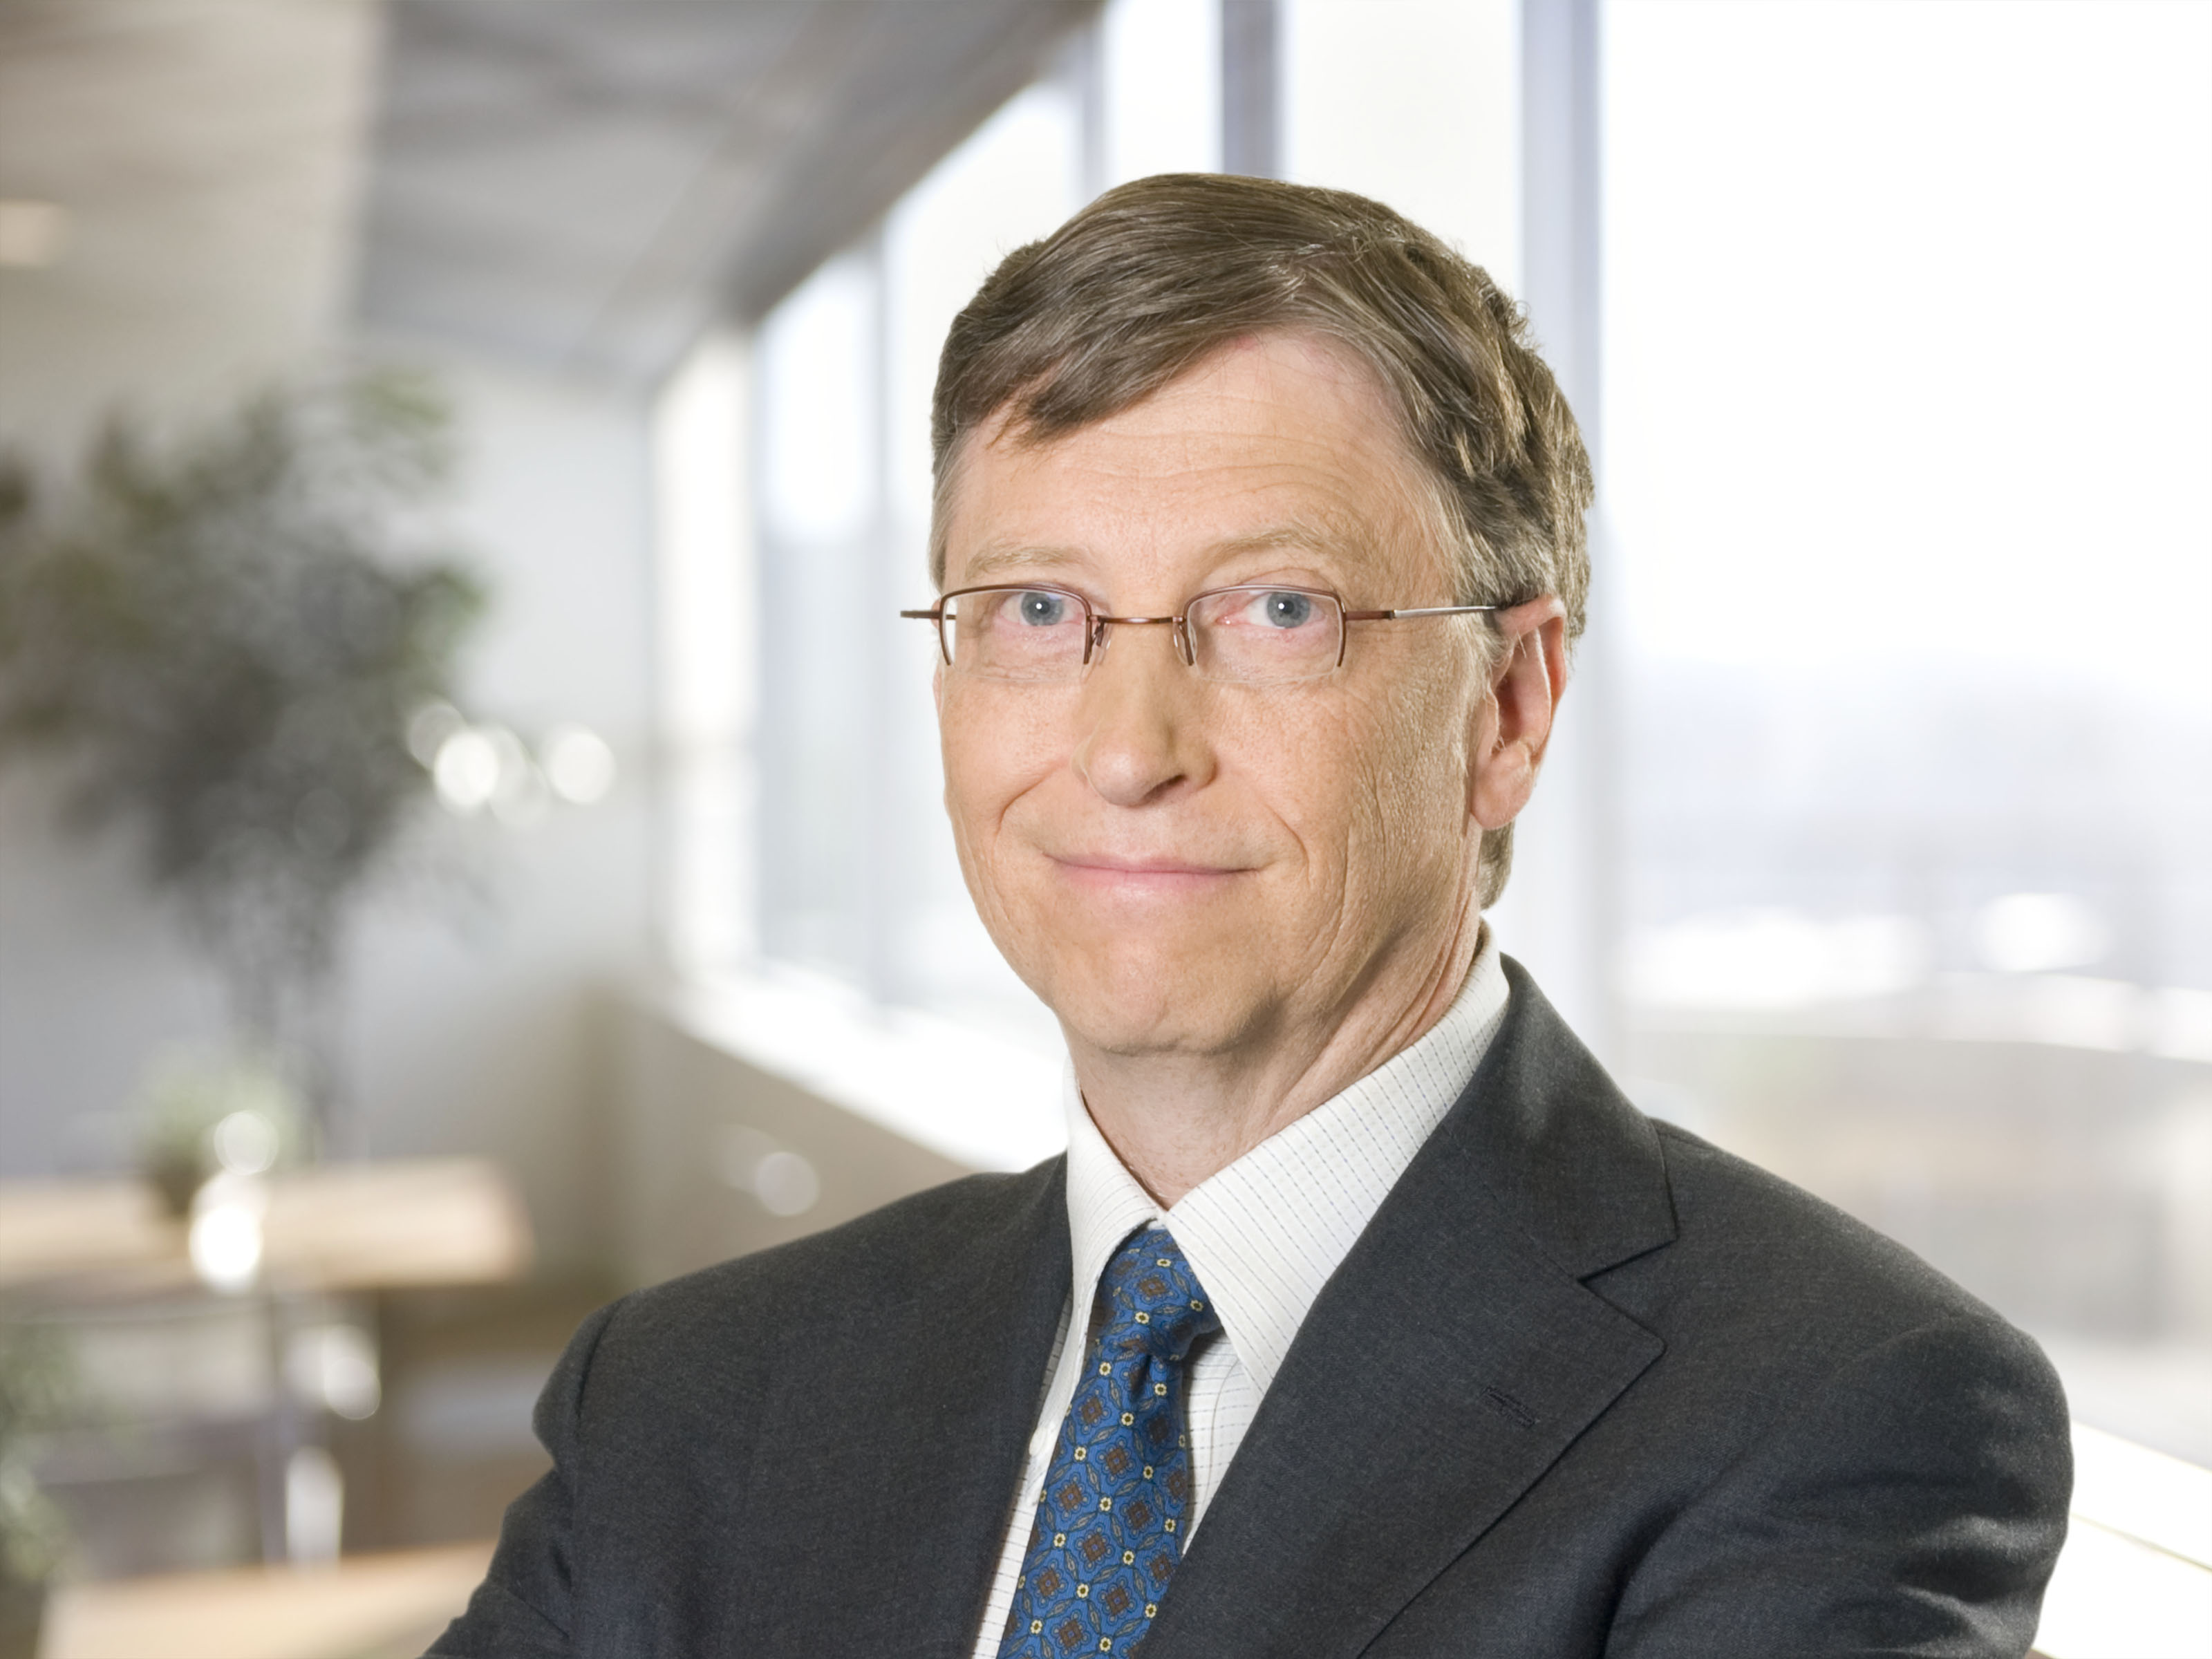 Bill Gates Wallpapers